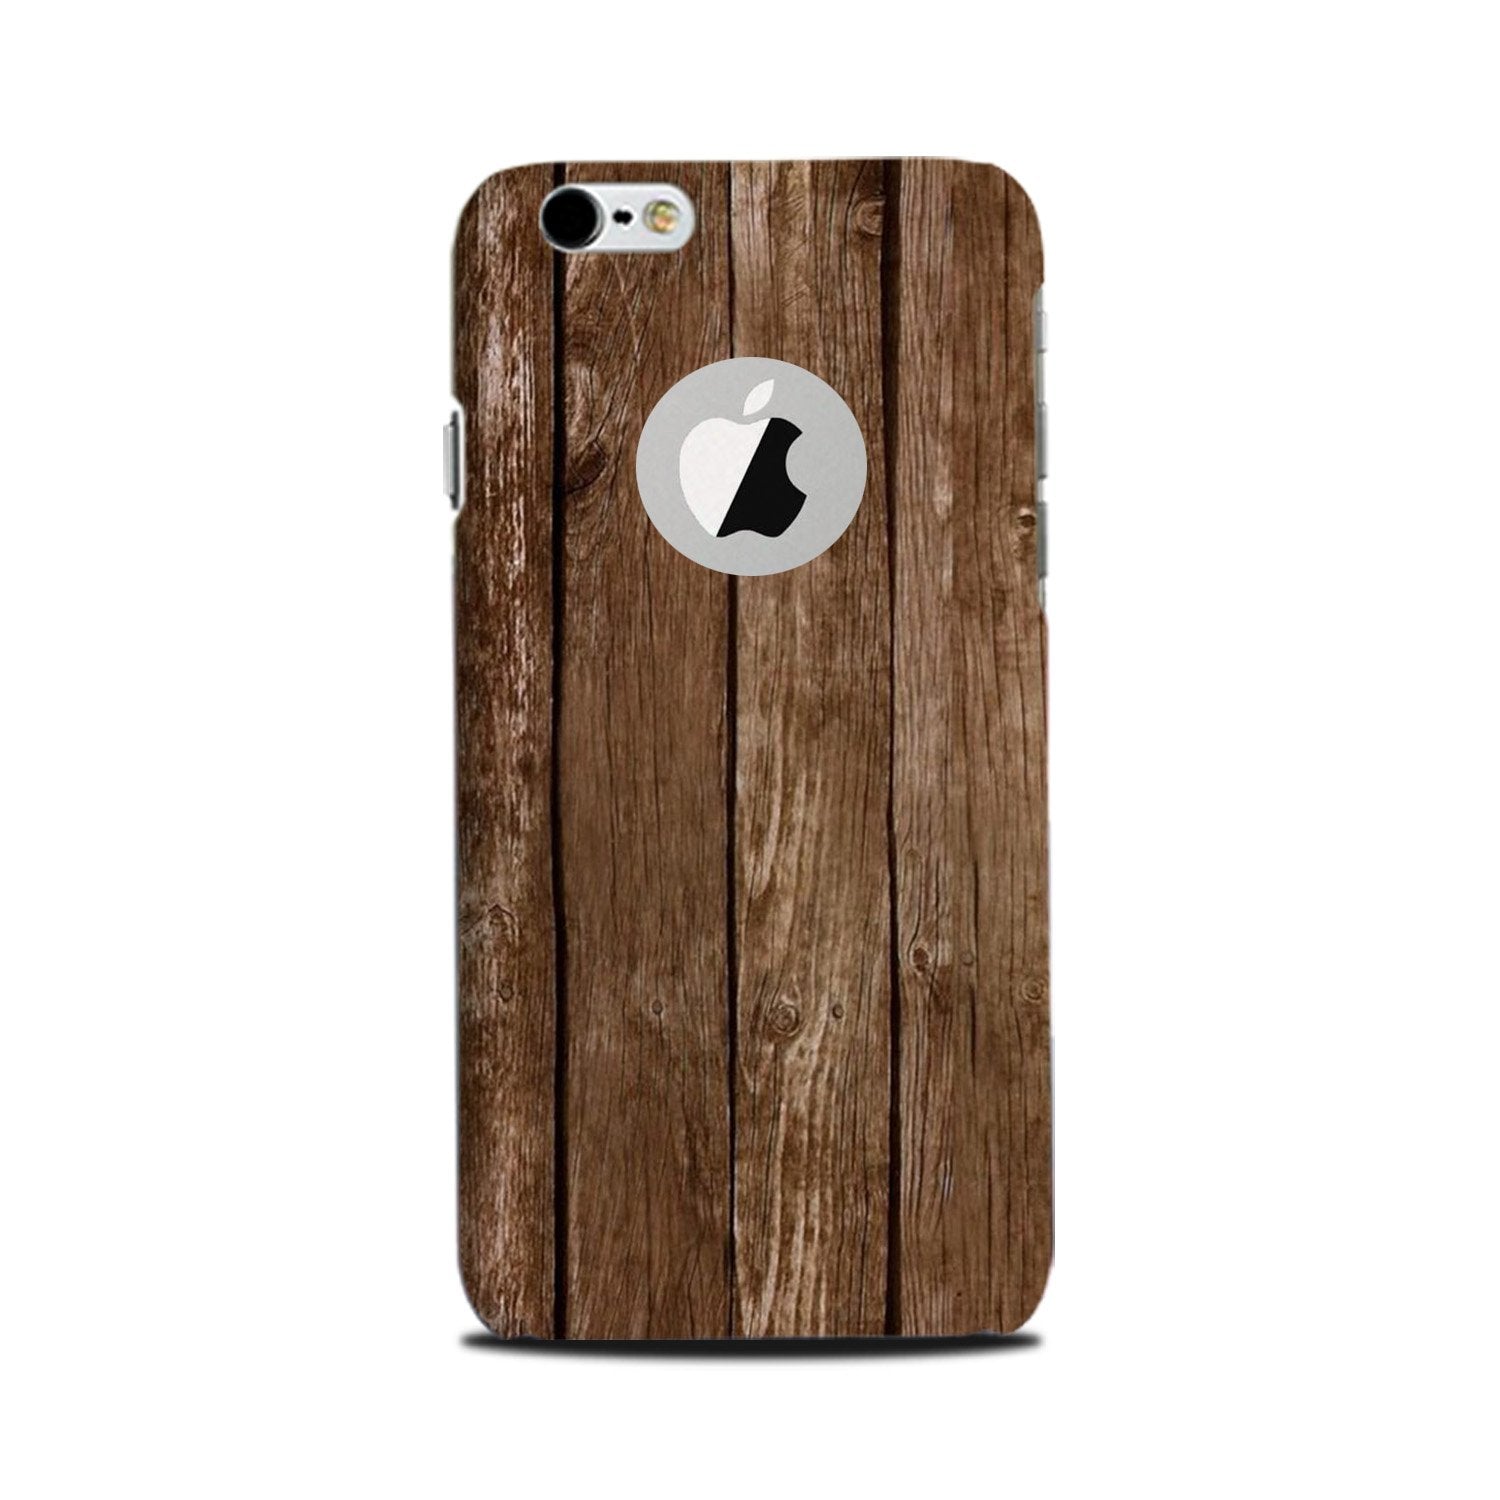 Wooden Look Case for iPhone 6 Plus / 6s Plus logo cut   (Design - 112)